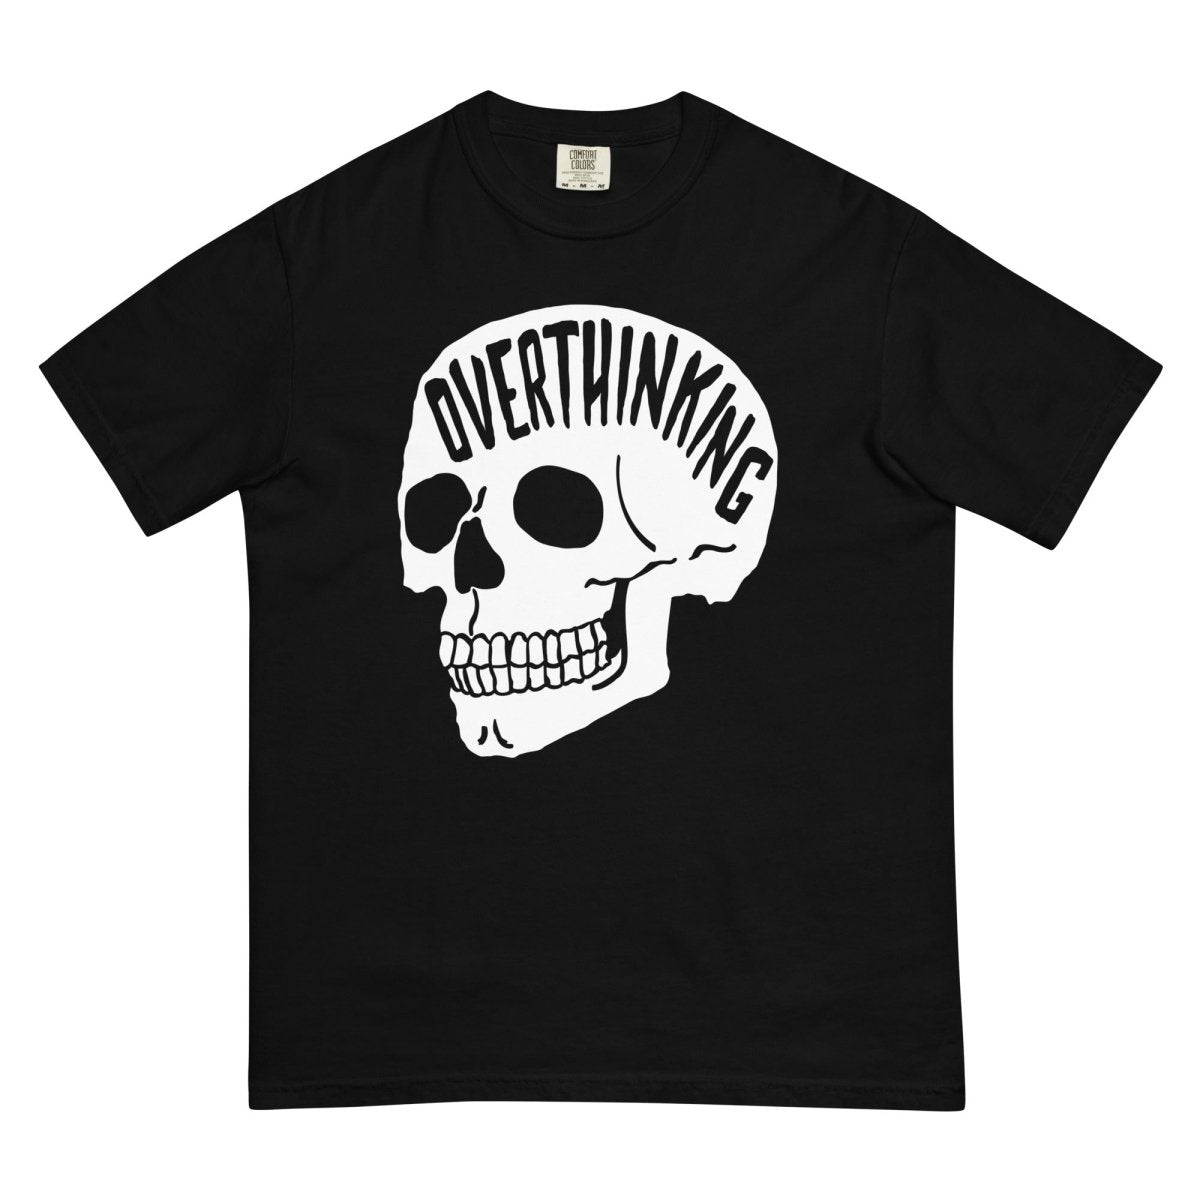 Overthinking premium garment dyed t-shirt - Pretty Bad Co.